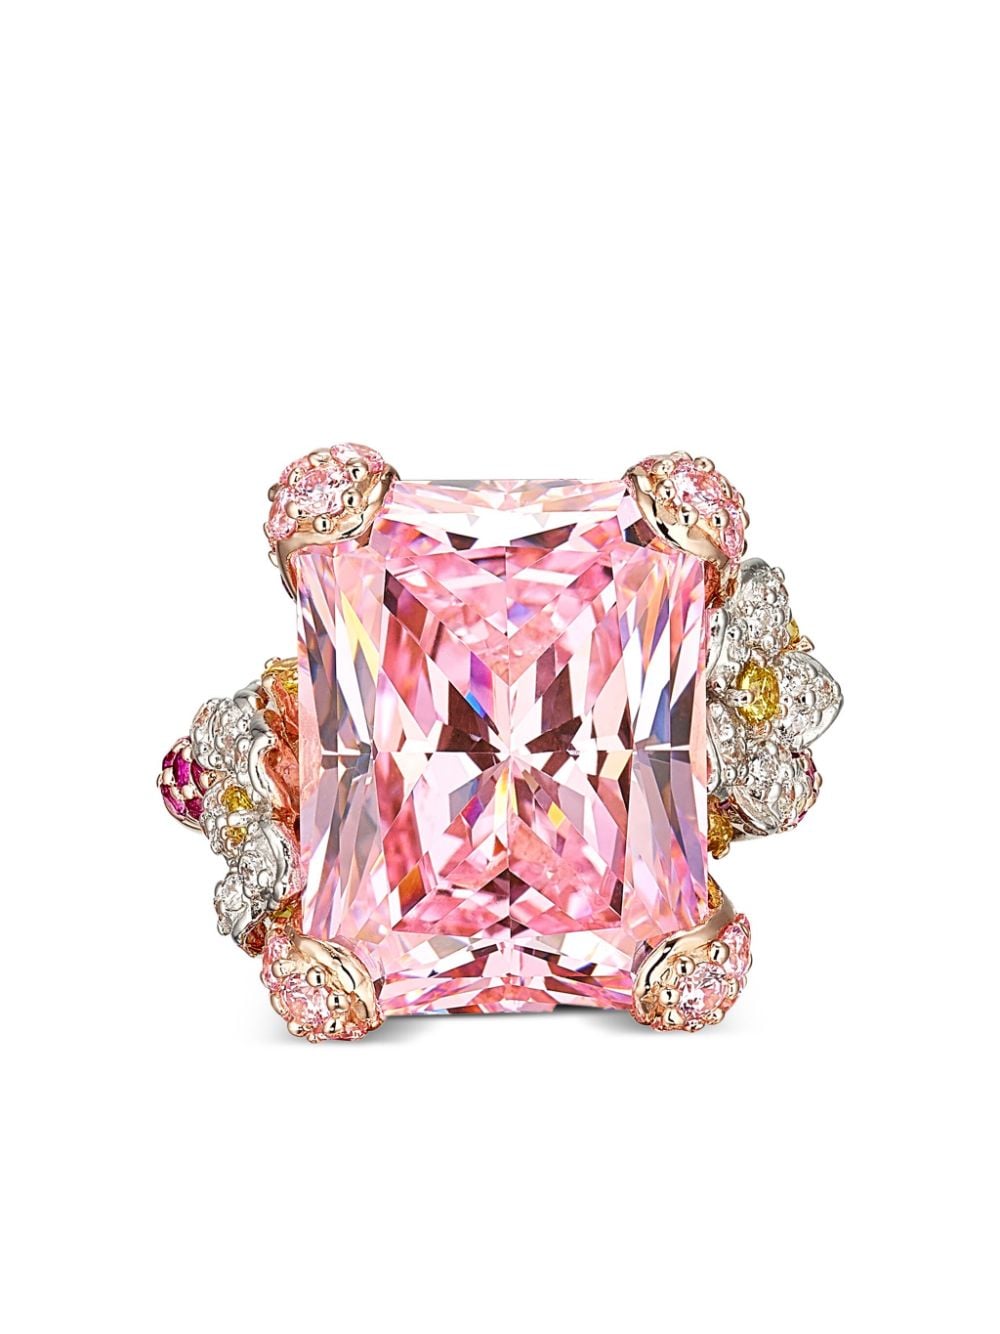 18kt rose gold Cinderella pink sapphire cocktail ring